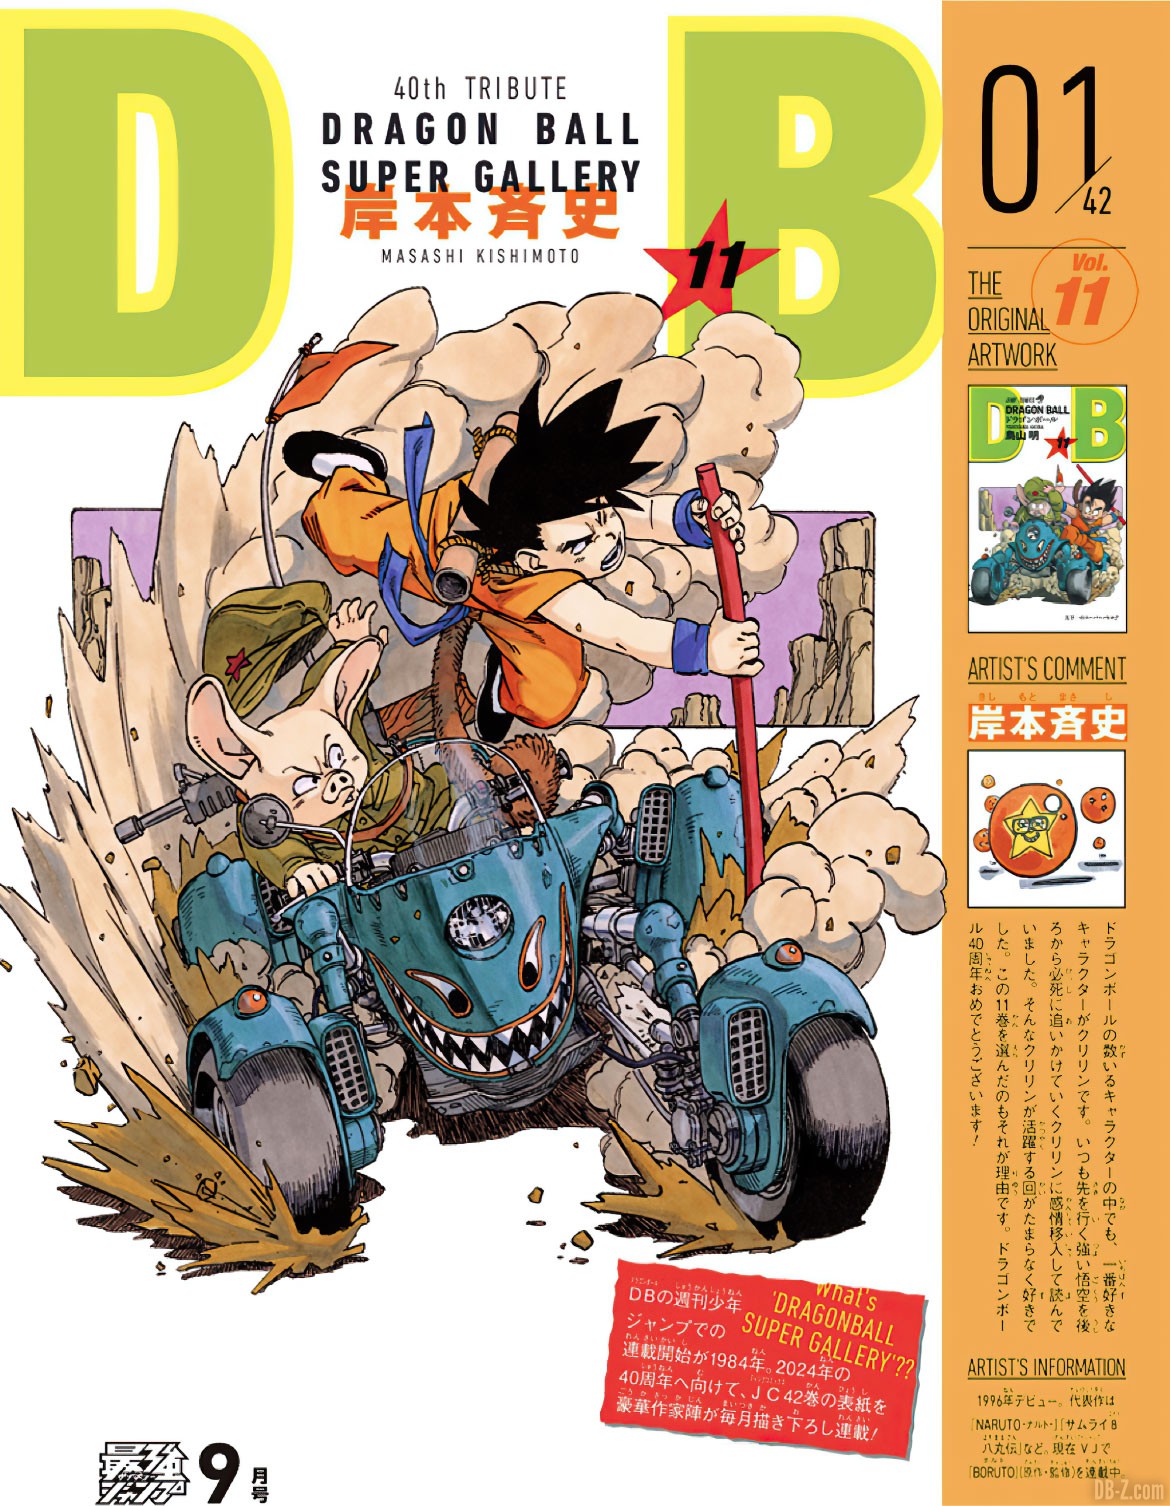 Dragon Ball Super Gallery [01/42] : Le message de l'auteur de Naruto,  Masashi Kishimoto